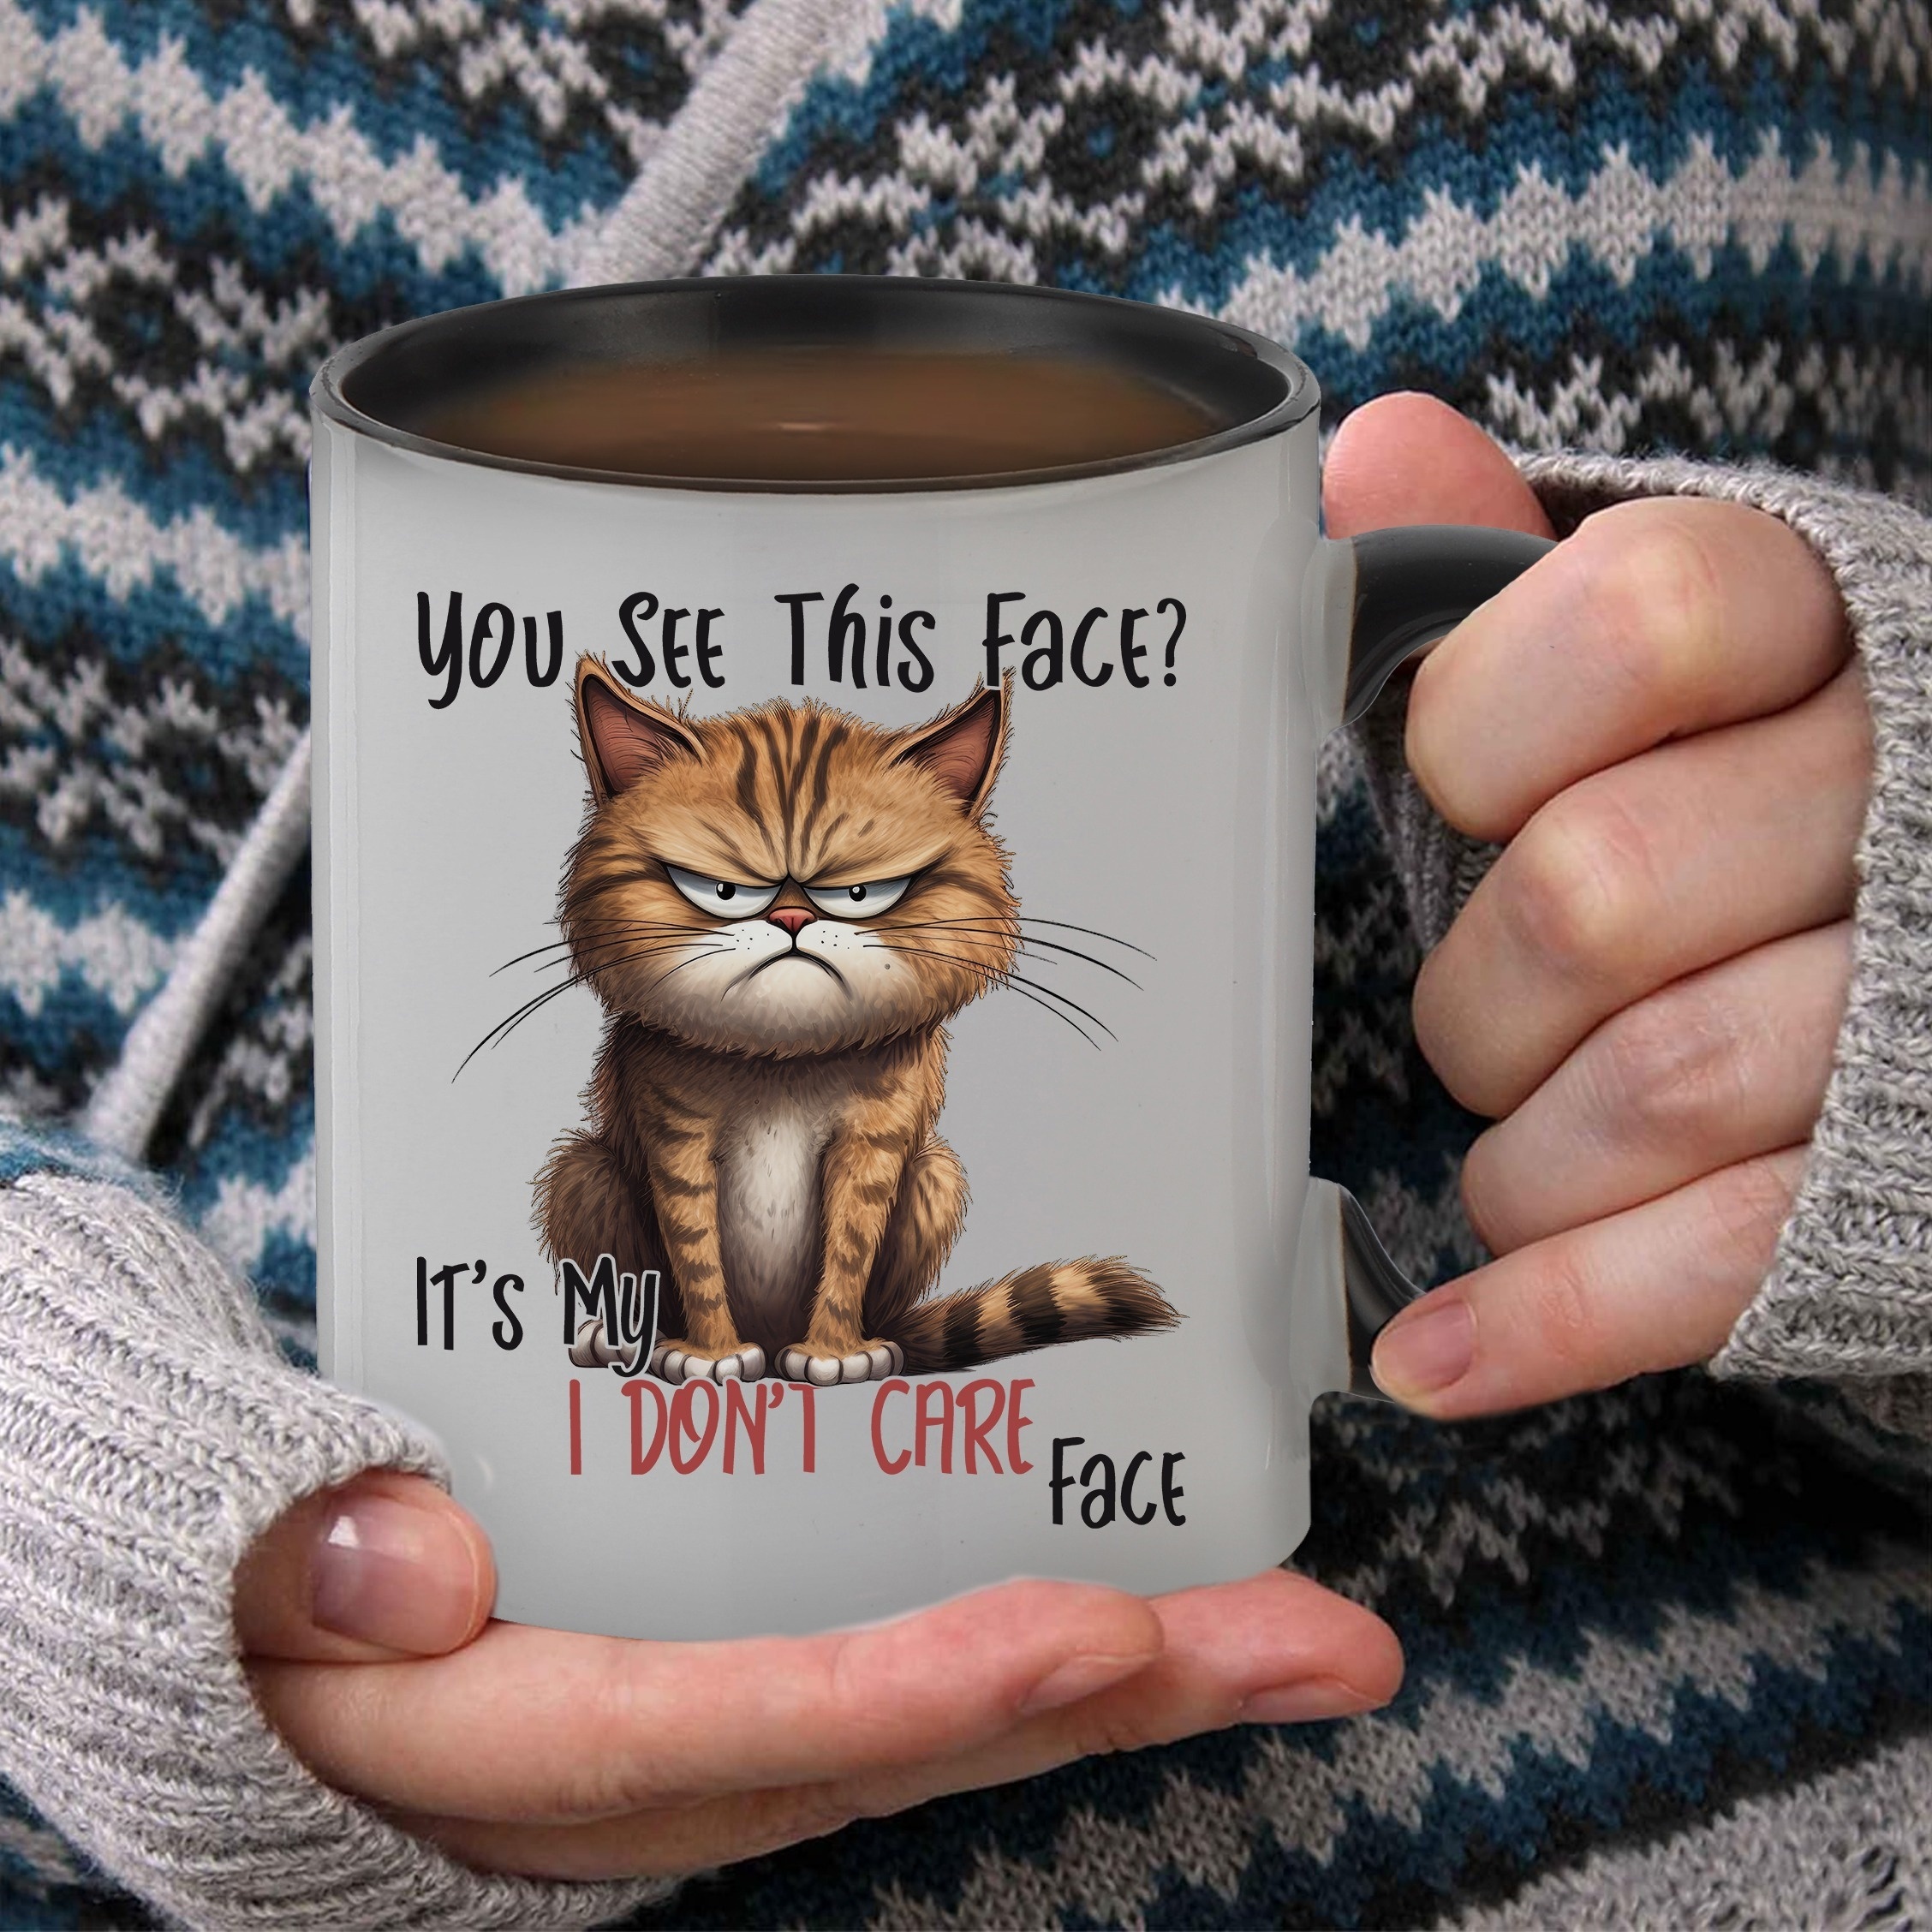 Friends Mug and Coffee Gift Set